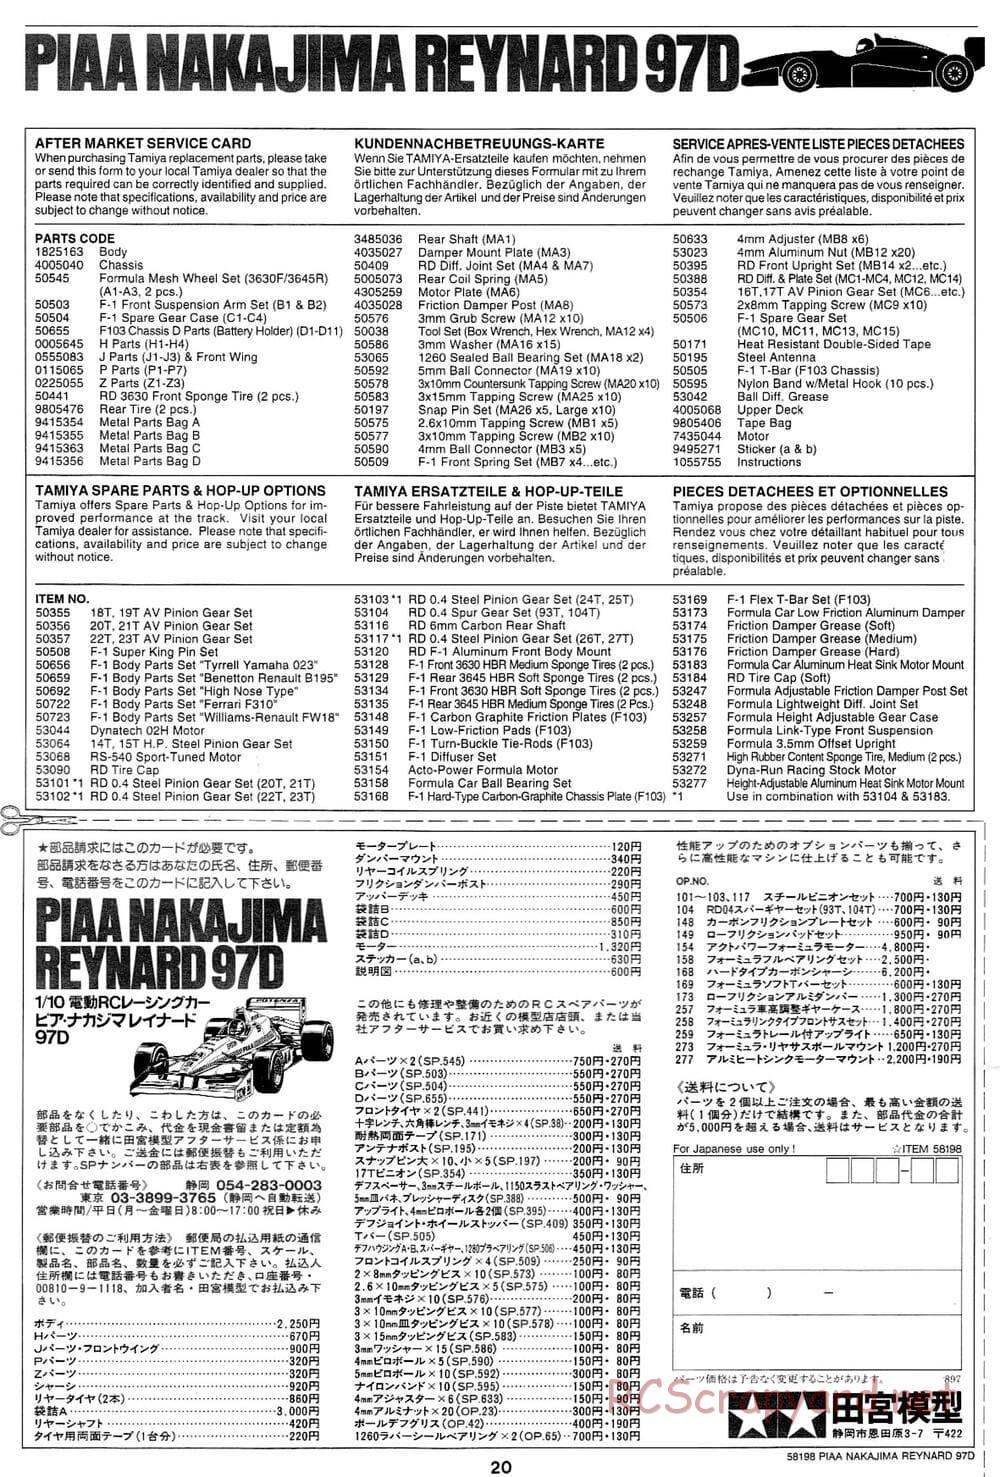 Tamiya - PIAA Nakajima Reynard 97D - F103 Chassis - Manuel - Page 20